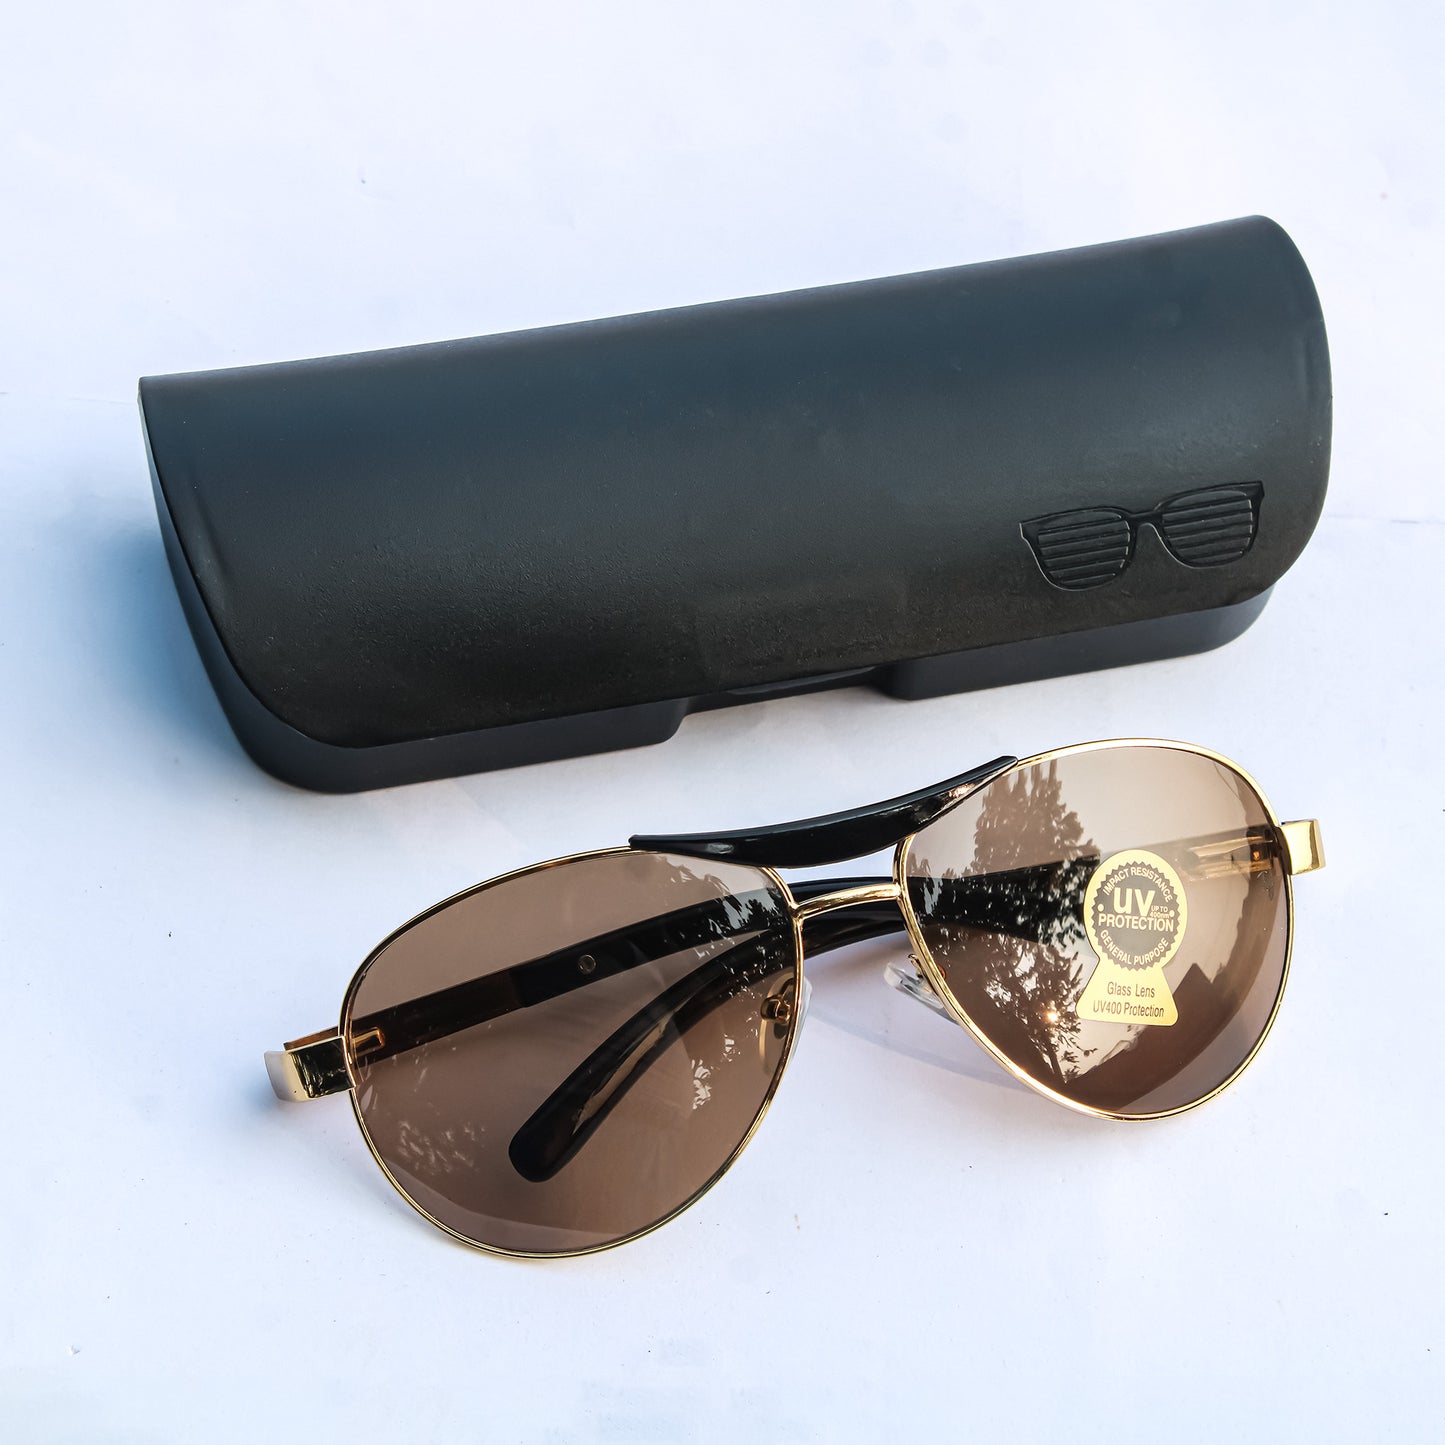 Jiebo UV400 Aviator Sunglasses For Men and Women